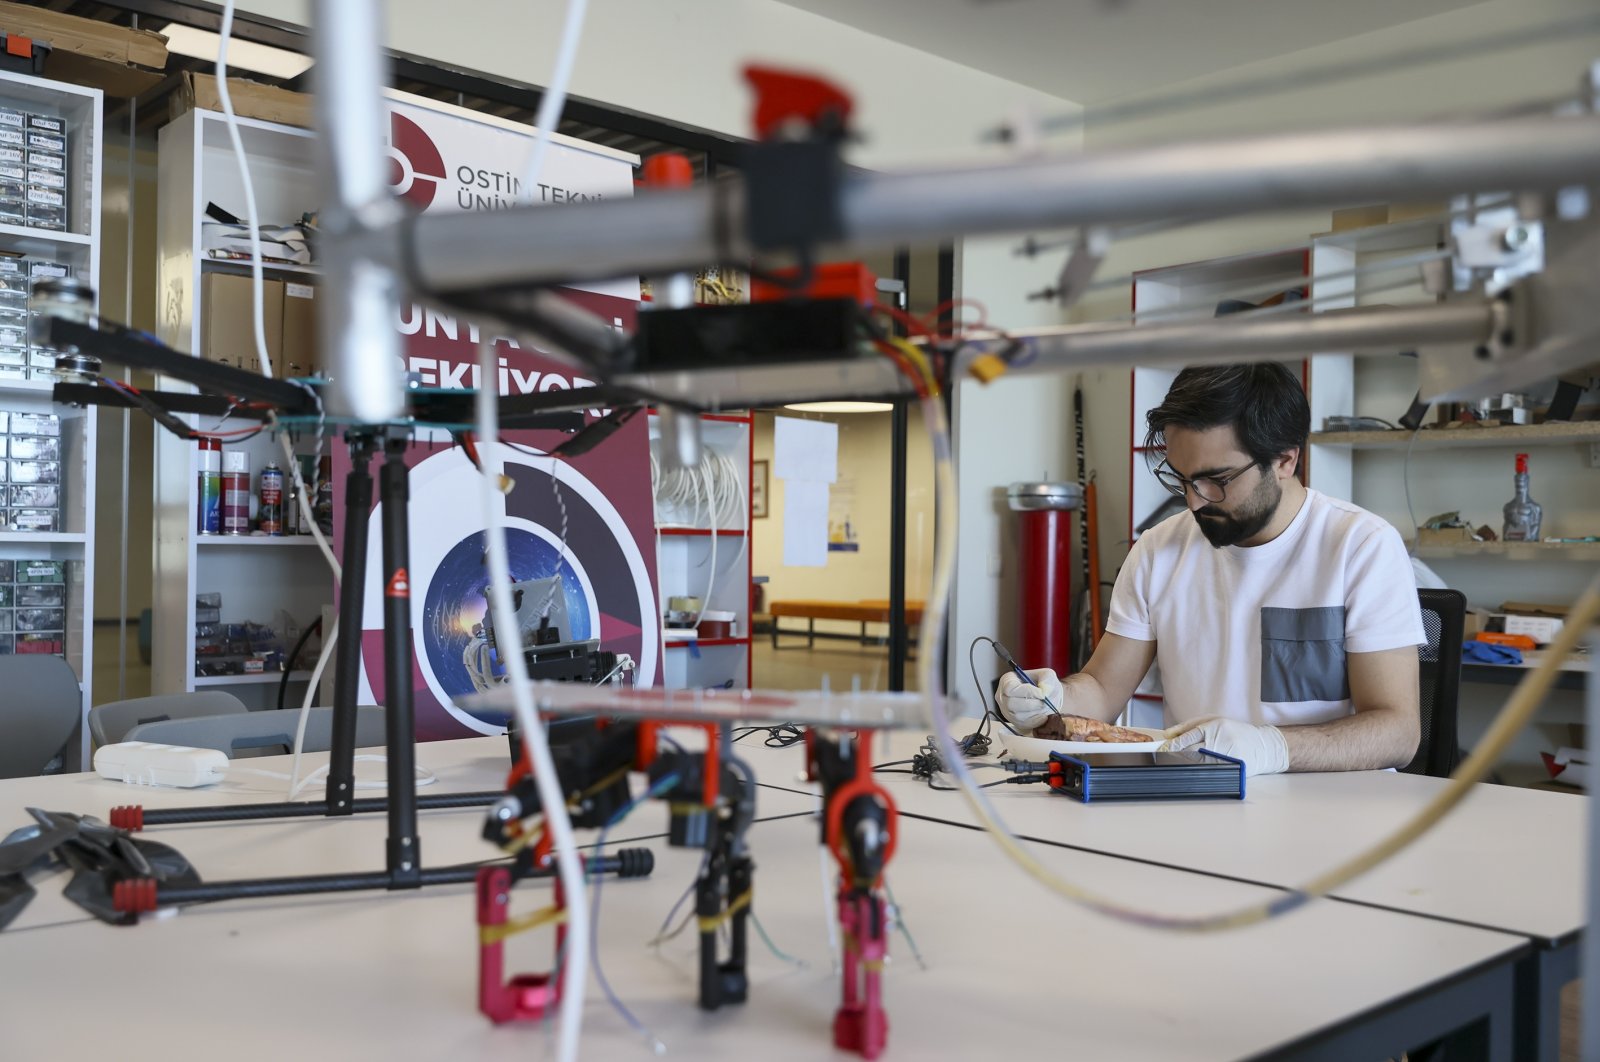 Ankara-based university develops portable electrocautery device